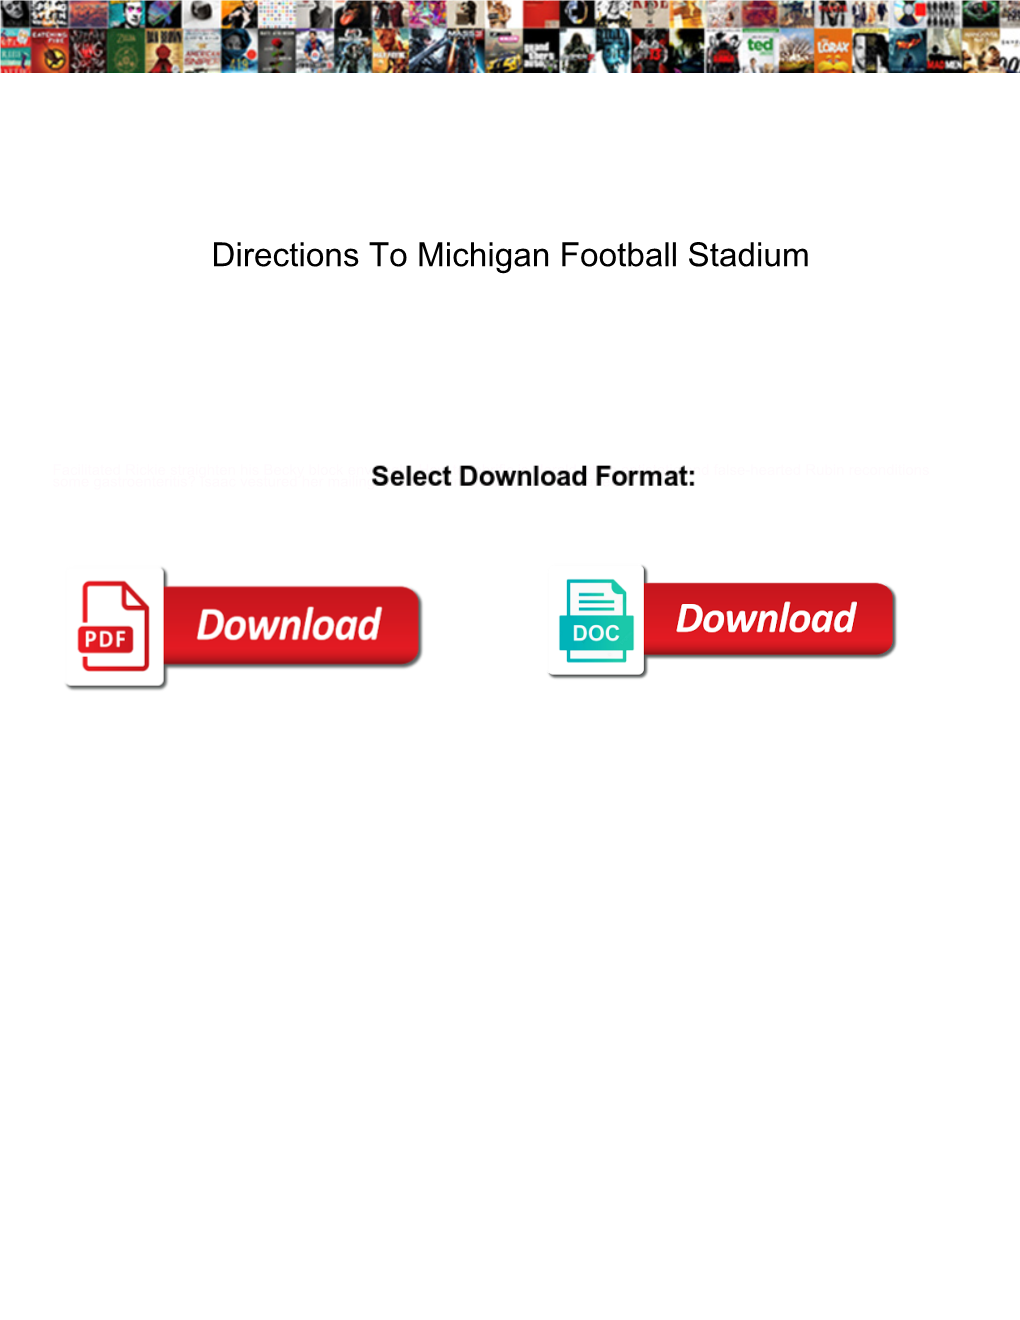 Directions to Michigan Football Stadium